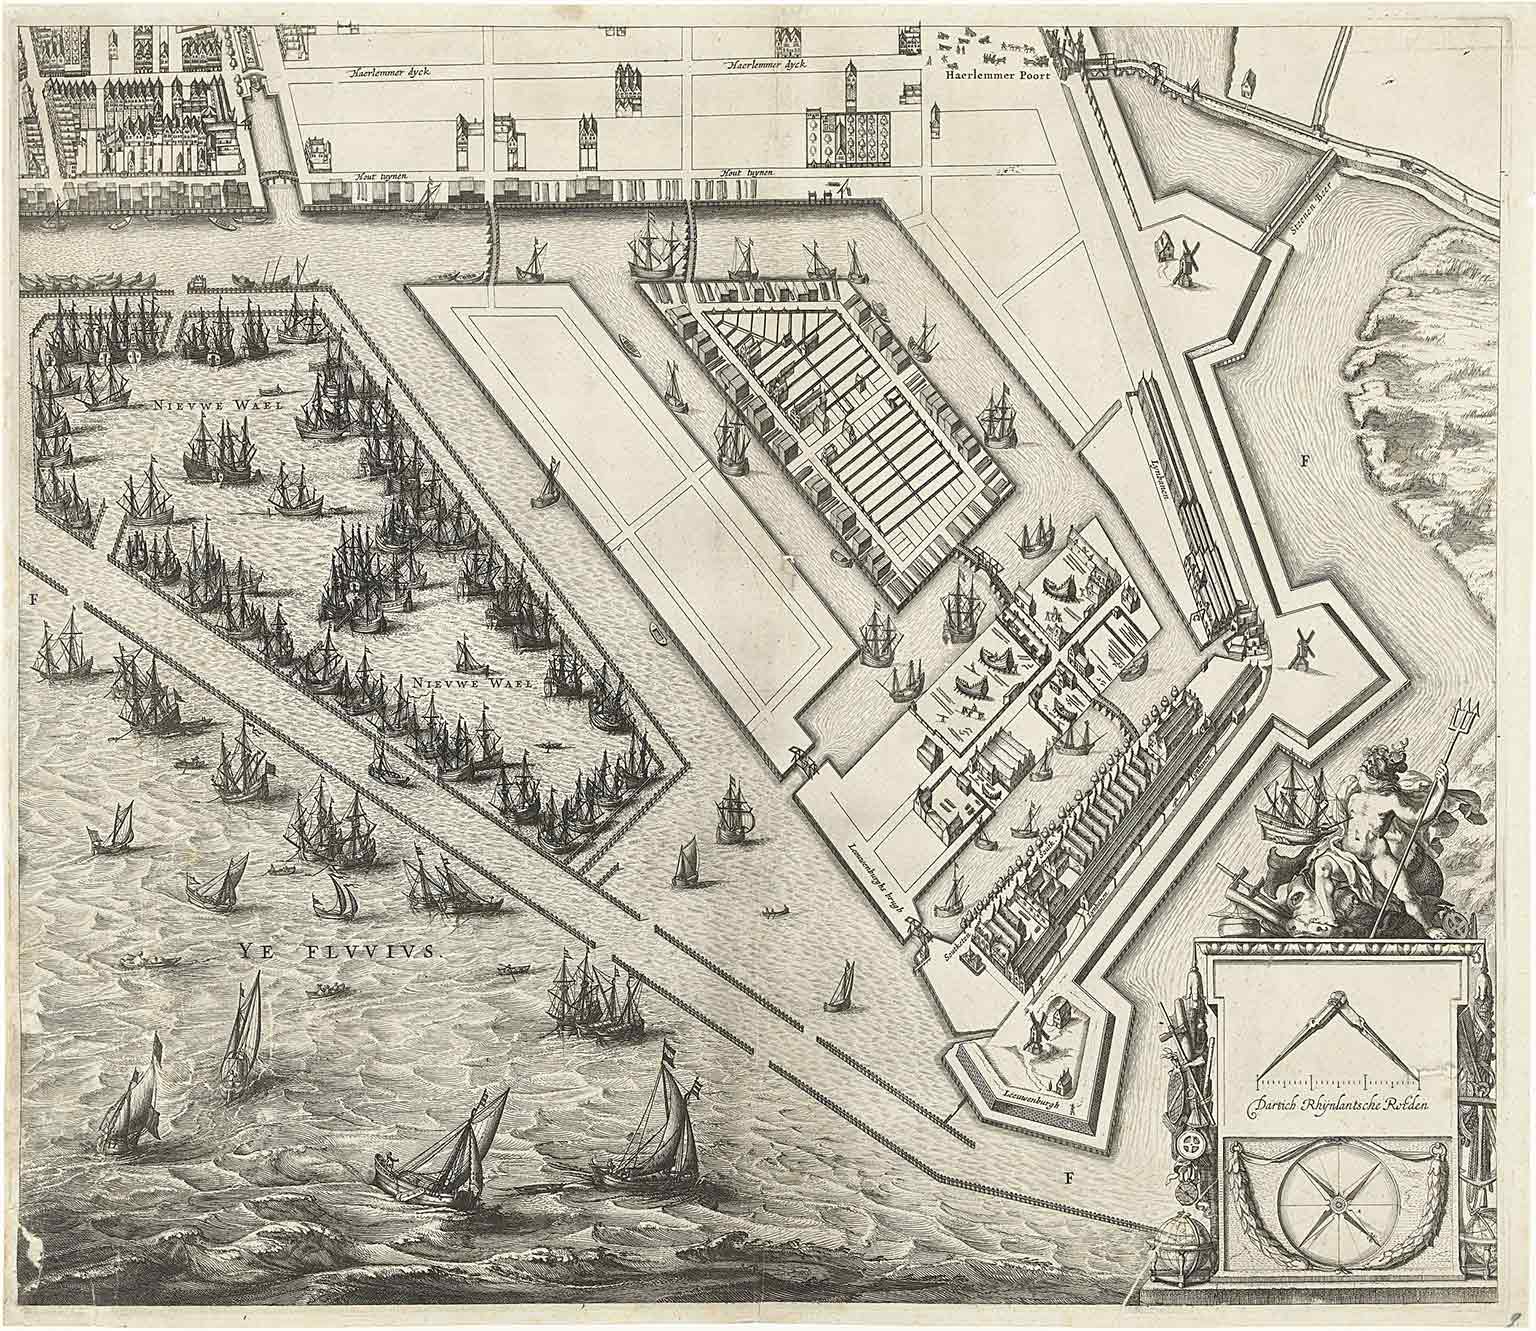 Map of the Western Islands, Amsterdam, from 1625 by Balthasar Florisz van Berckenrode